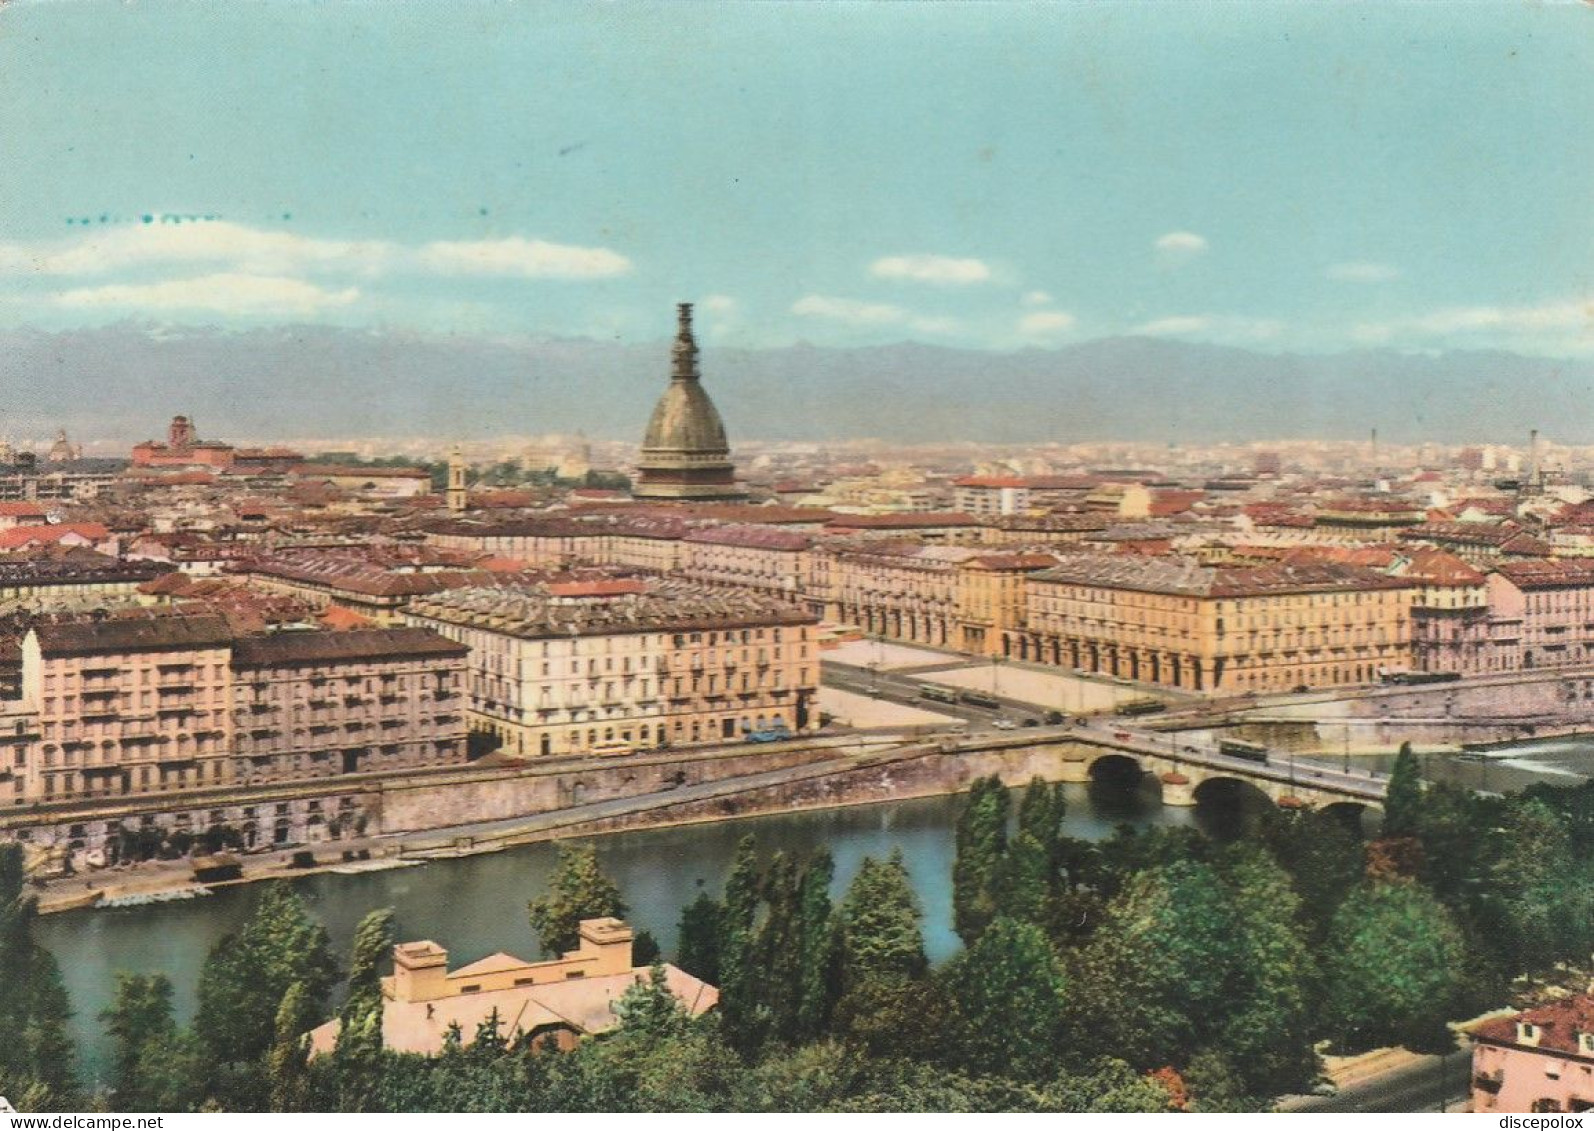 U4542 Torino - Panorama Della Città / Viaggiata 1960 - Mehransichten, Panoramakarten